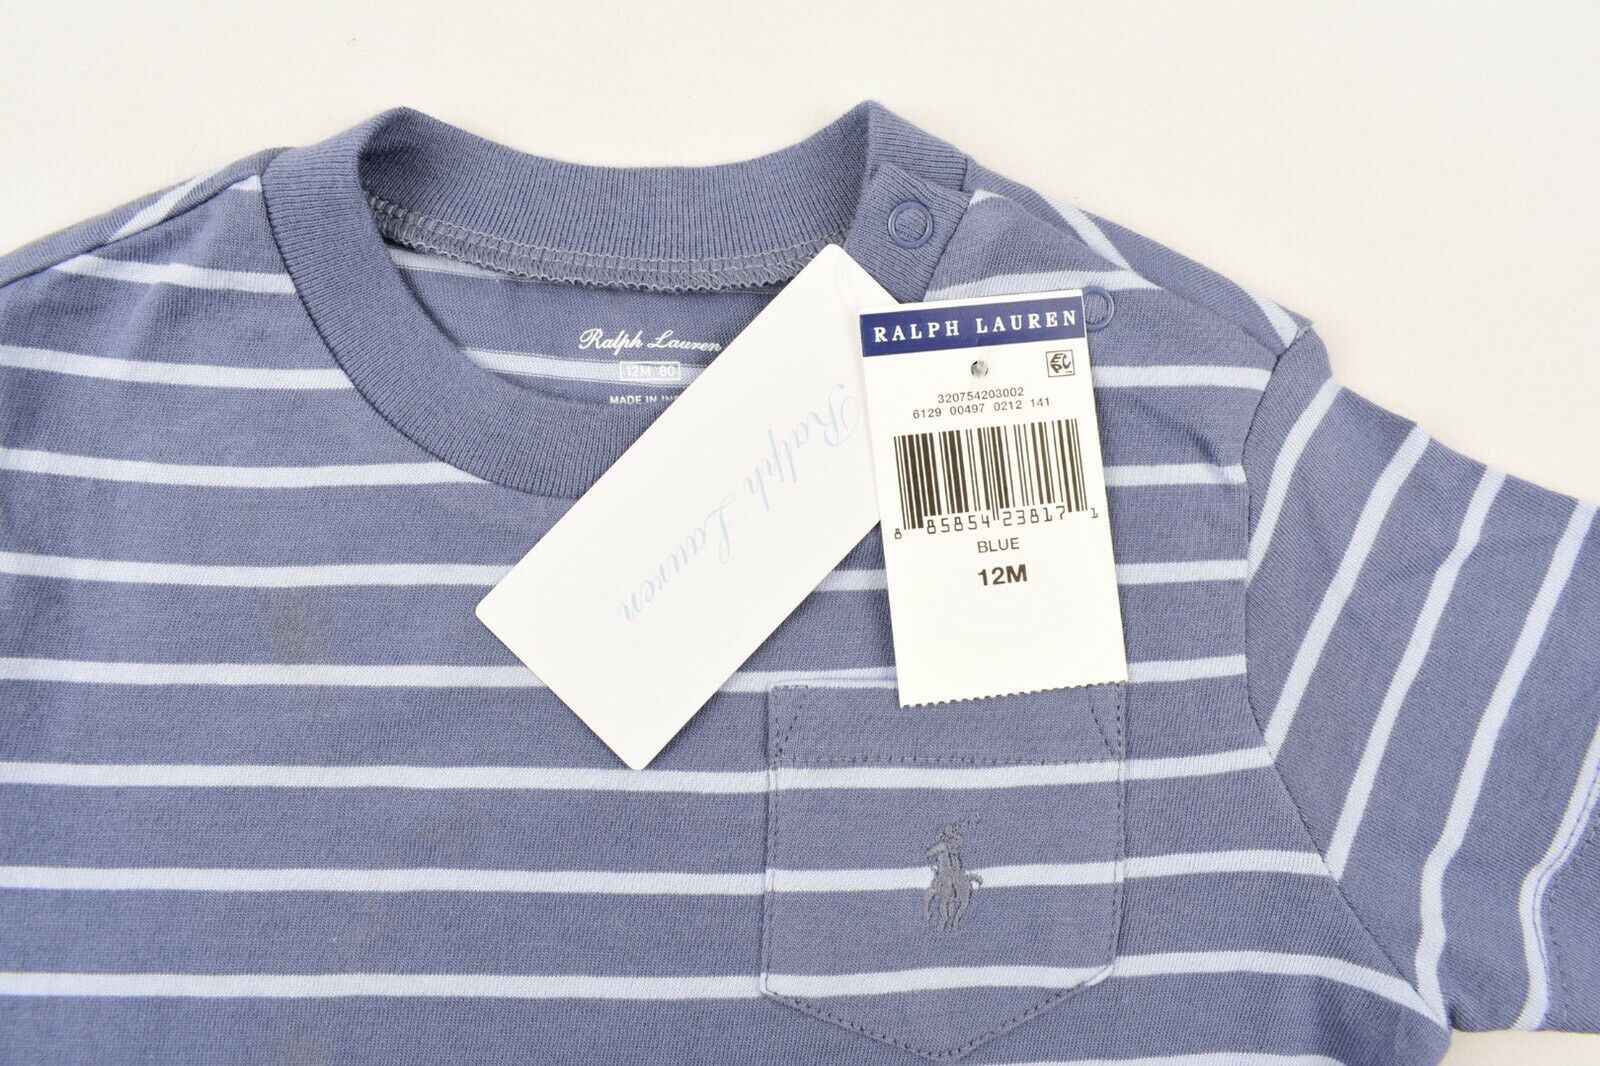 RALPH LAUREN Baby Boys' Crew Neck T-shirt, Blue Striped, 9 m /18 m /24 months